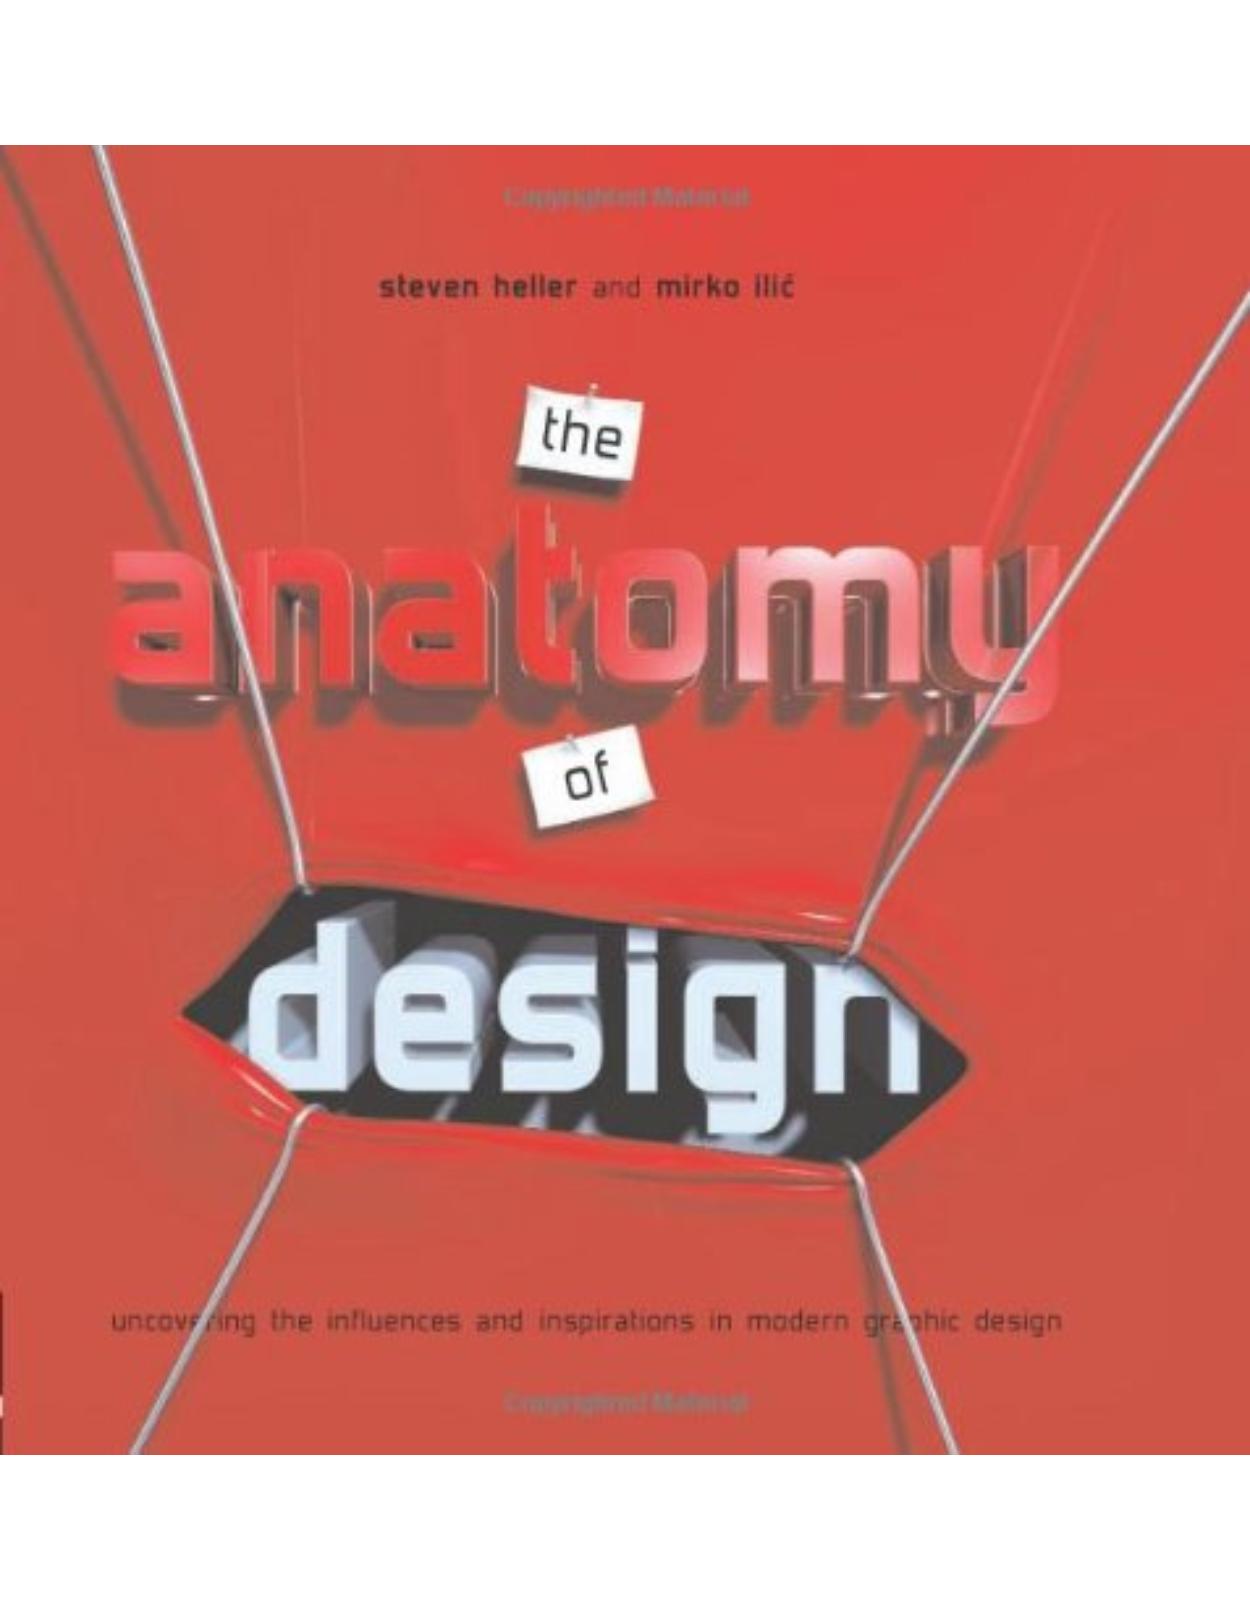 The Anatomy of Design